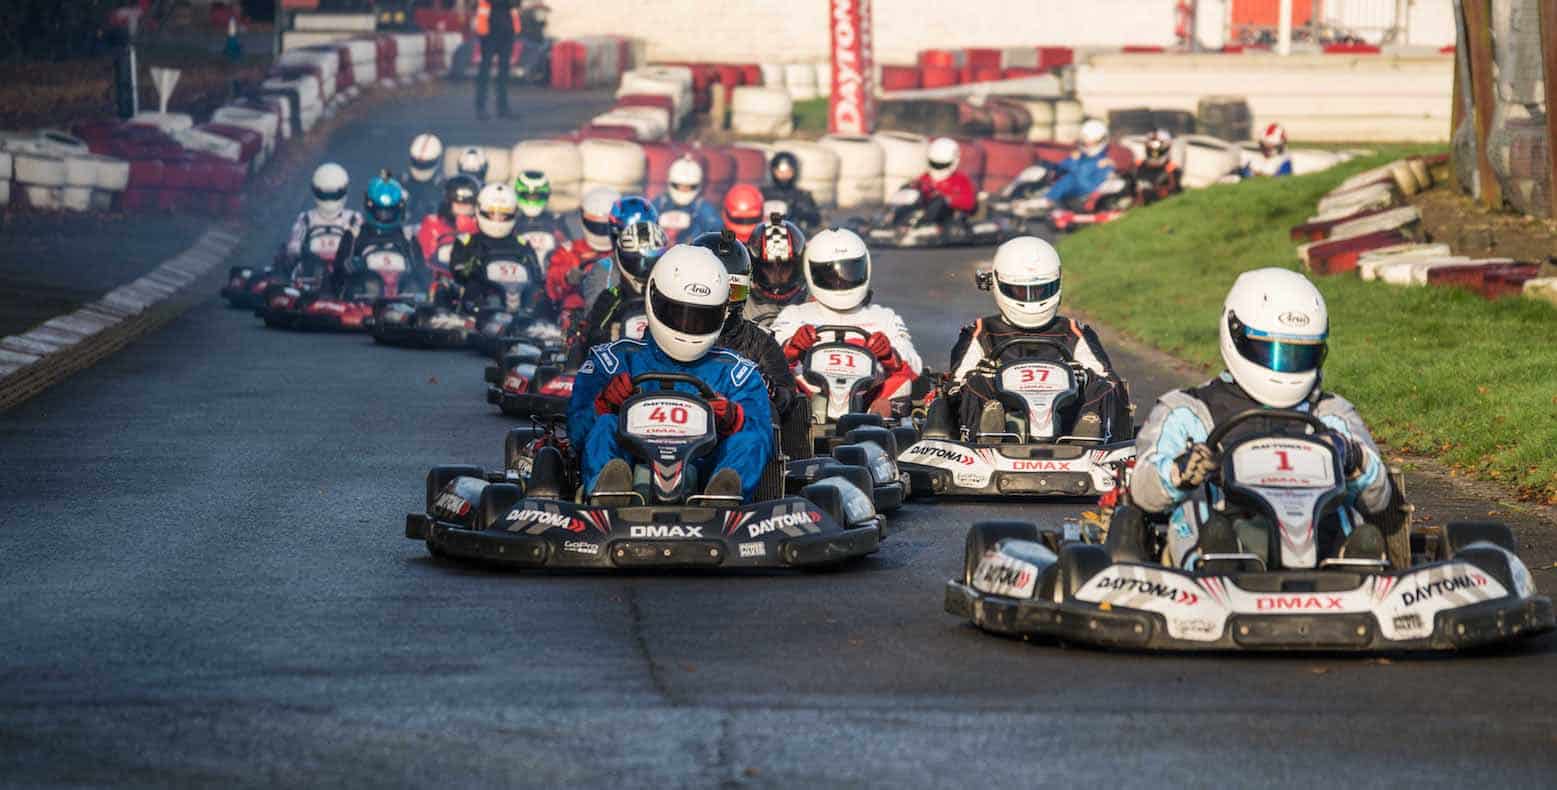 Daytona DMAX 2018 Championship launched